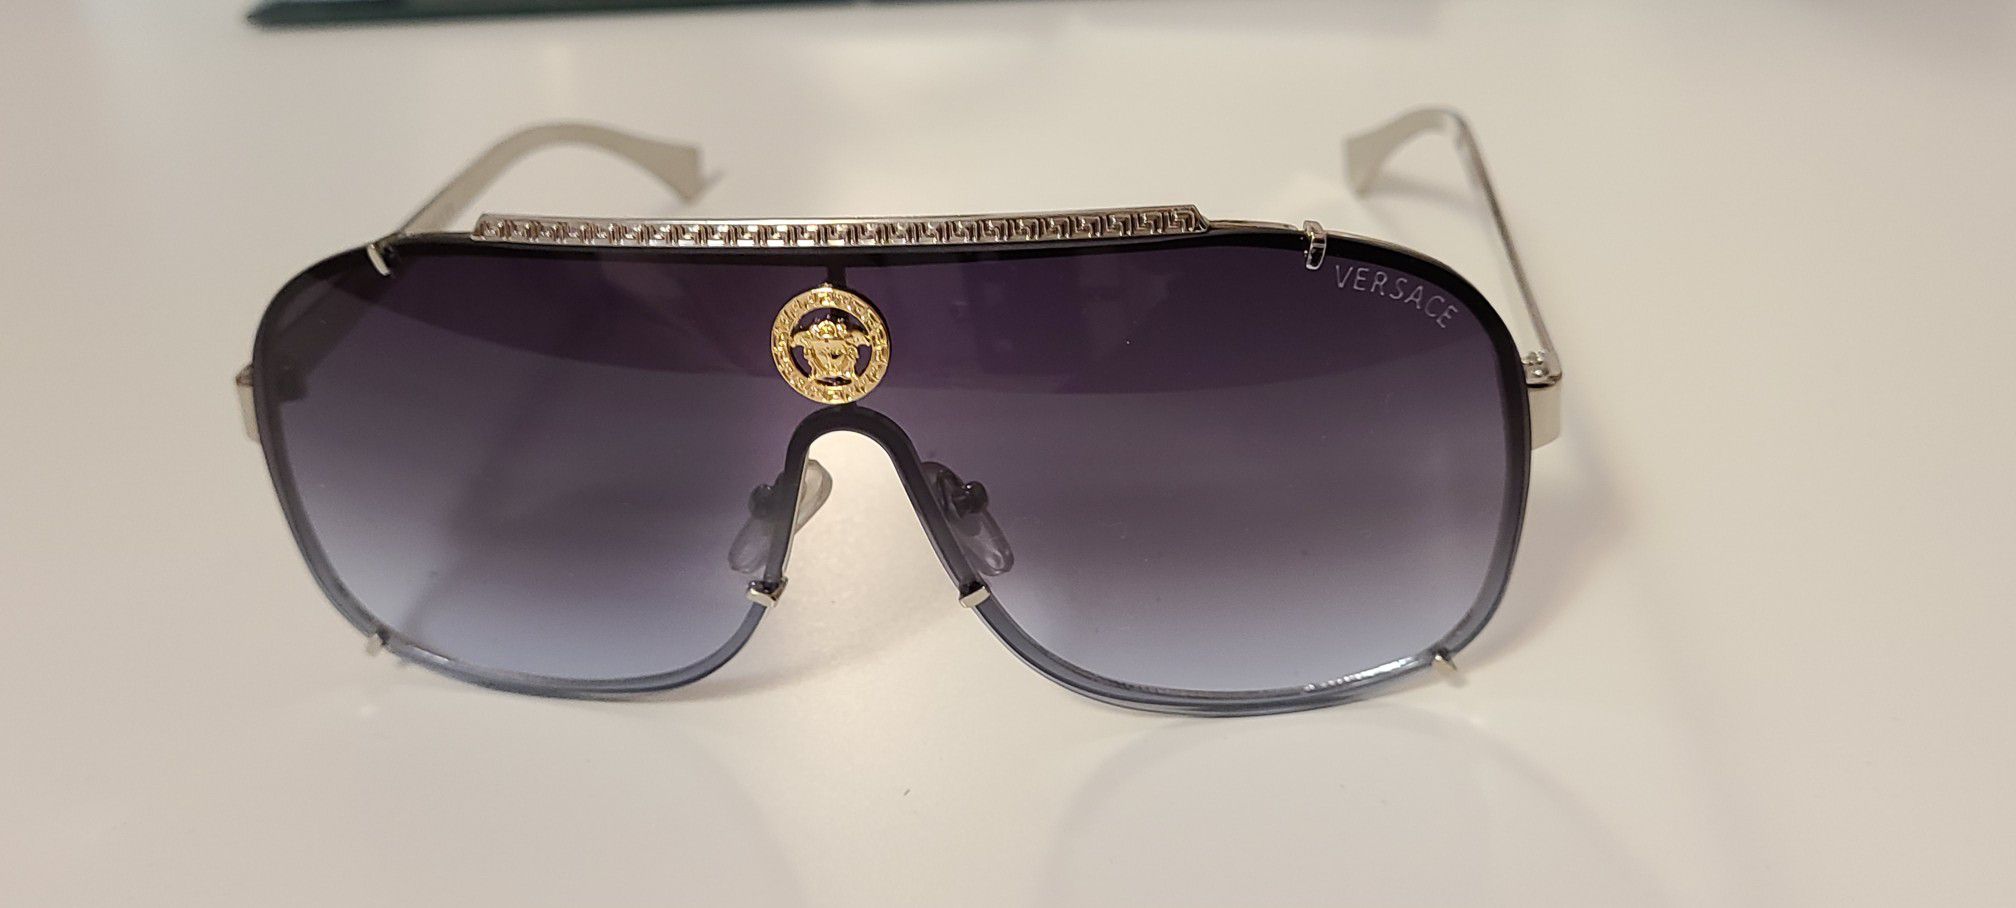 Sunglasses brand new